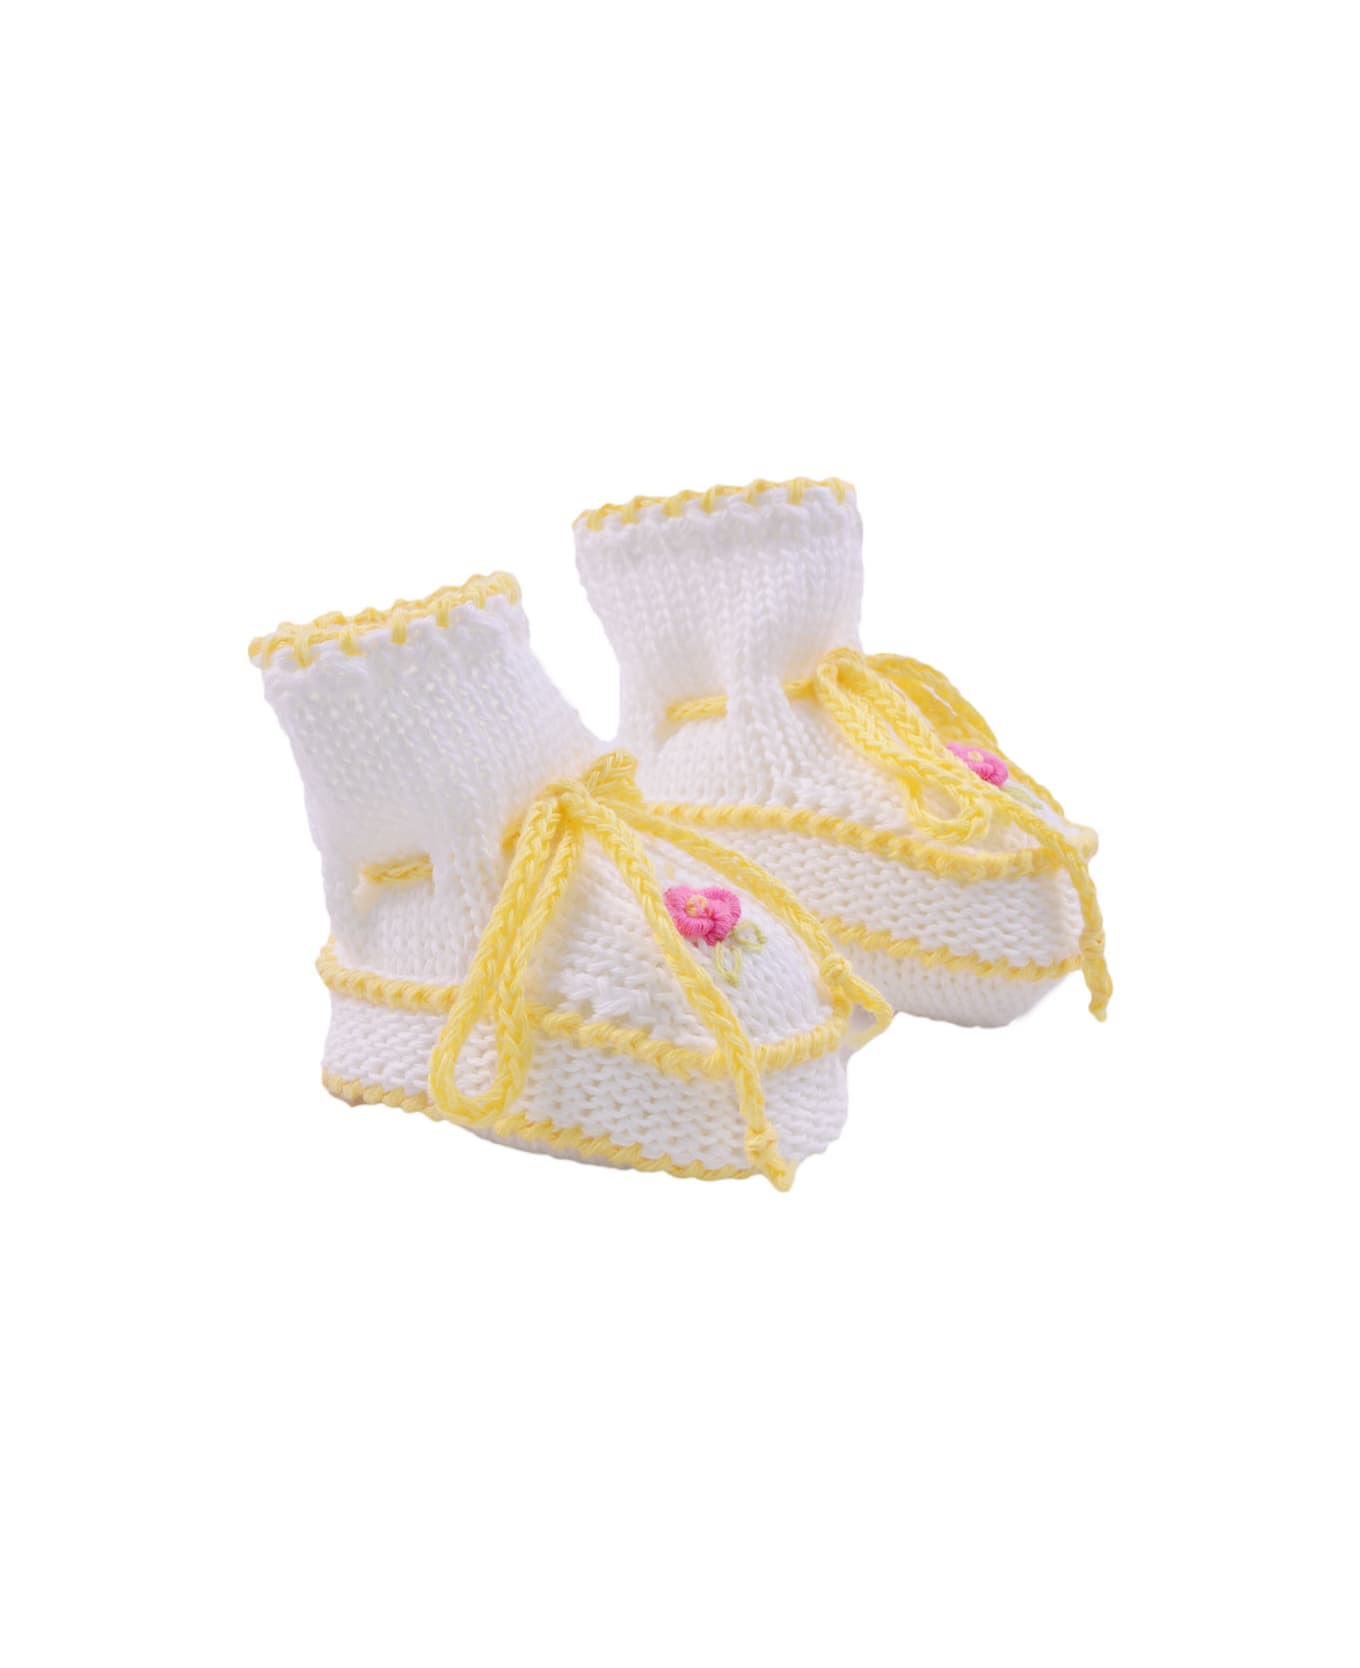 Piccola Giuggiola Cotton Knit Shoes - Yellow